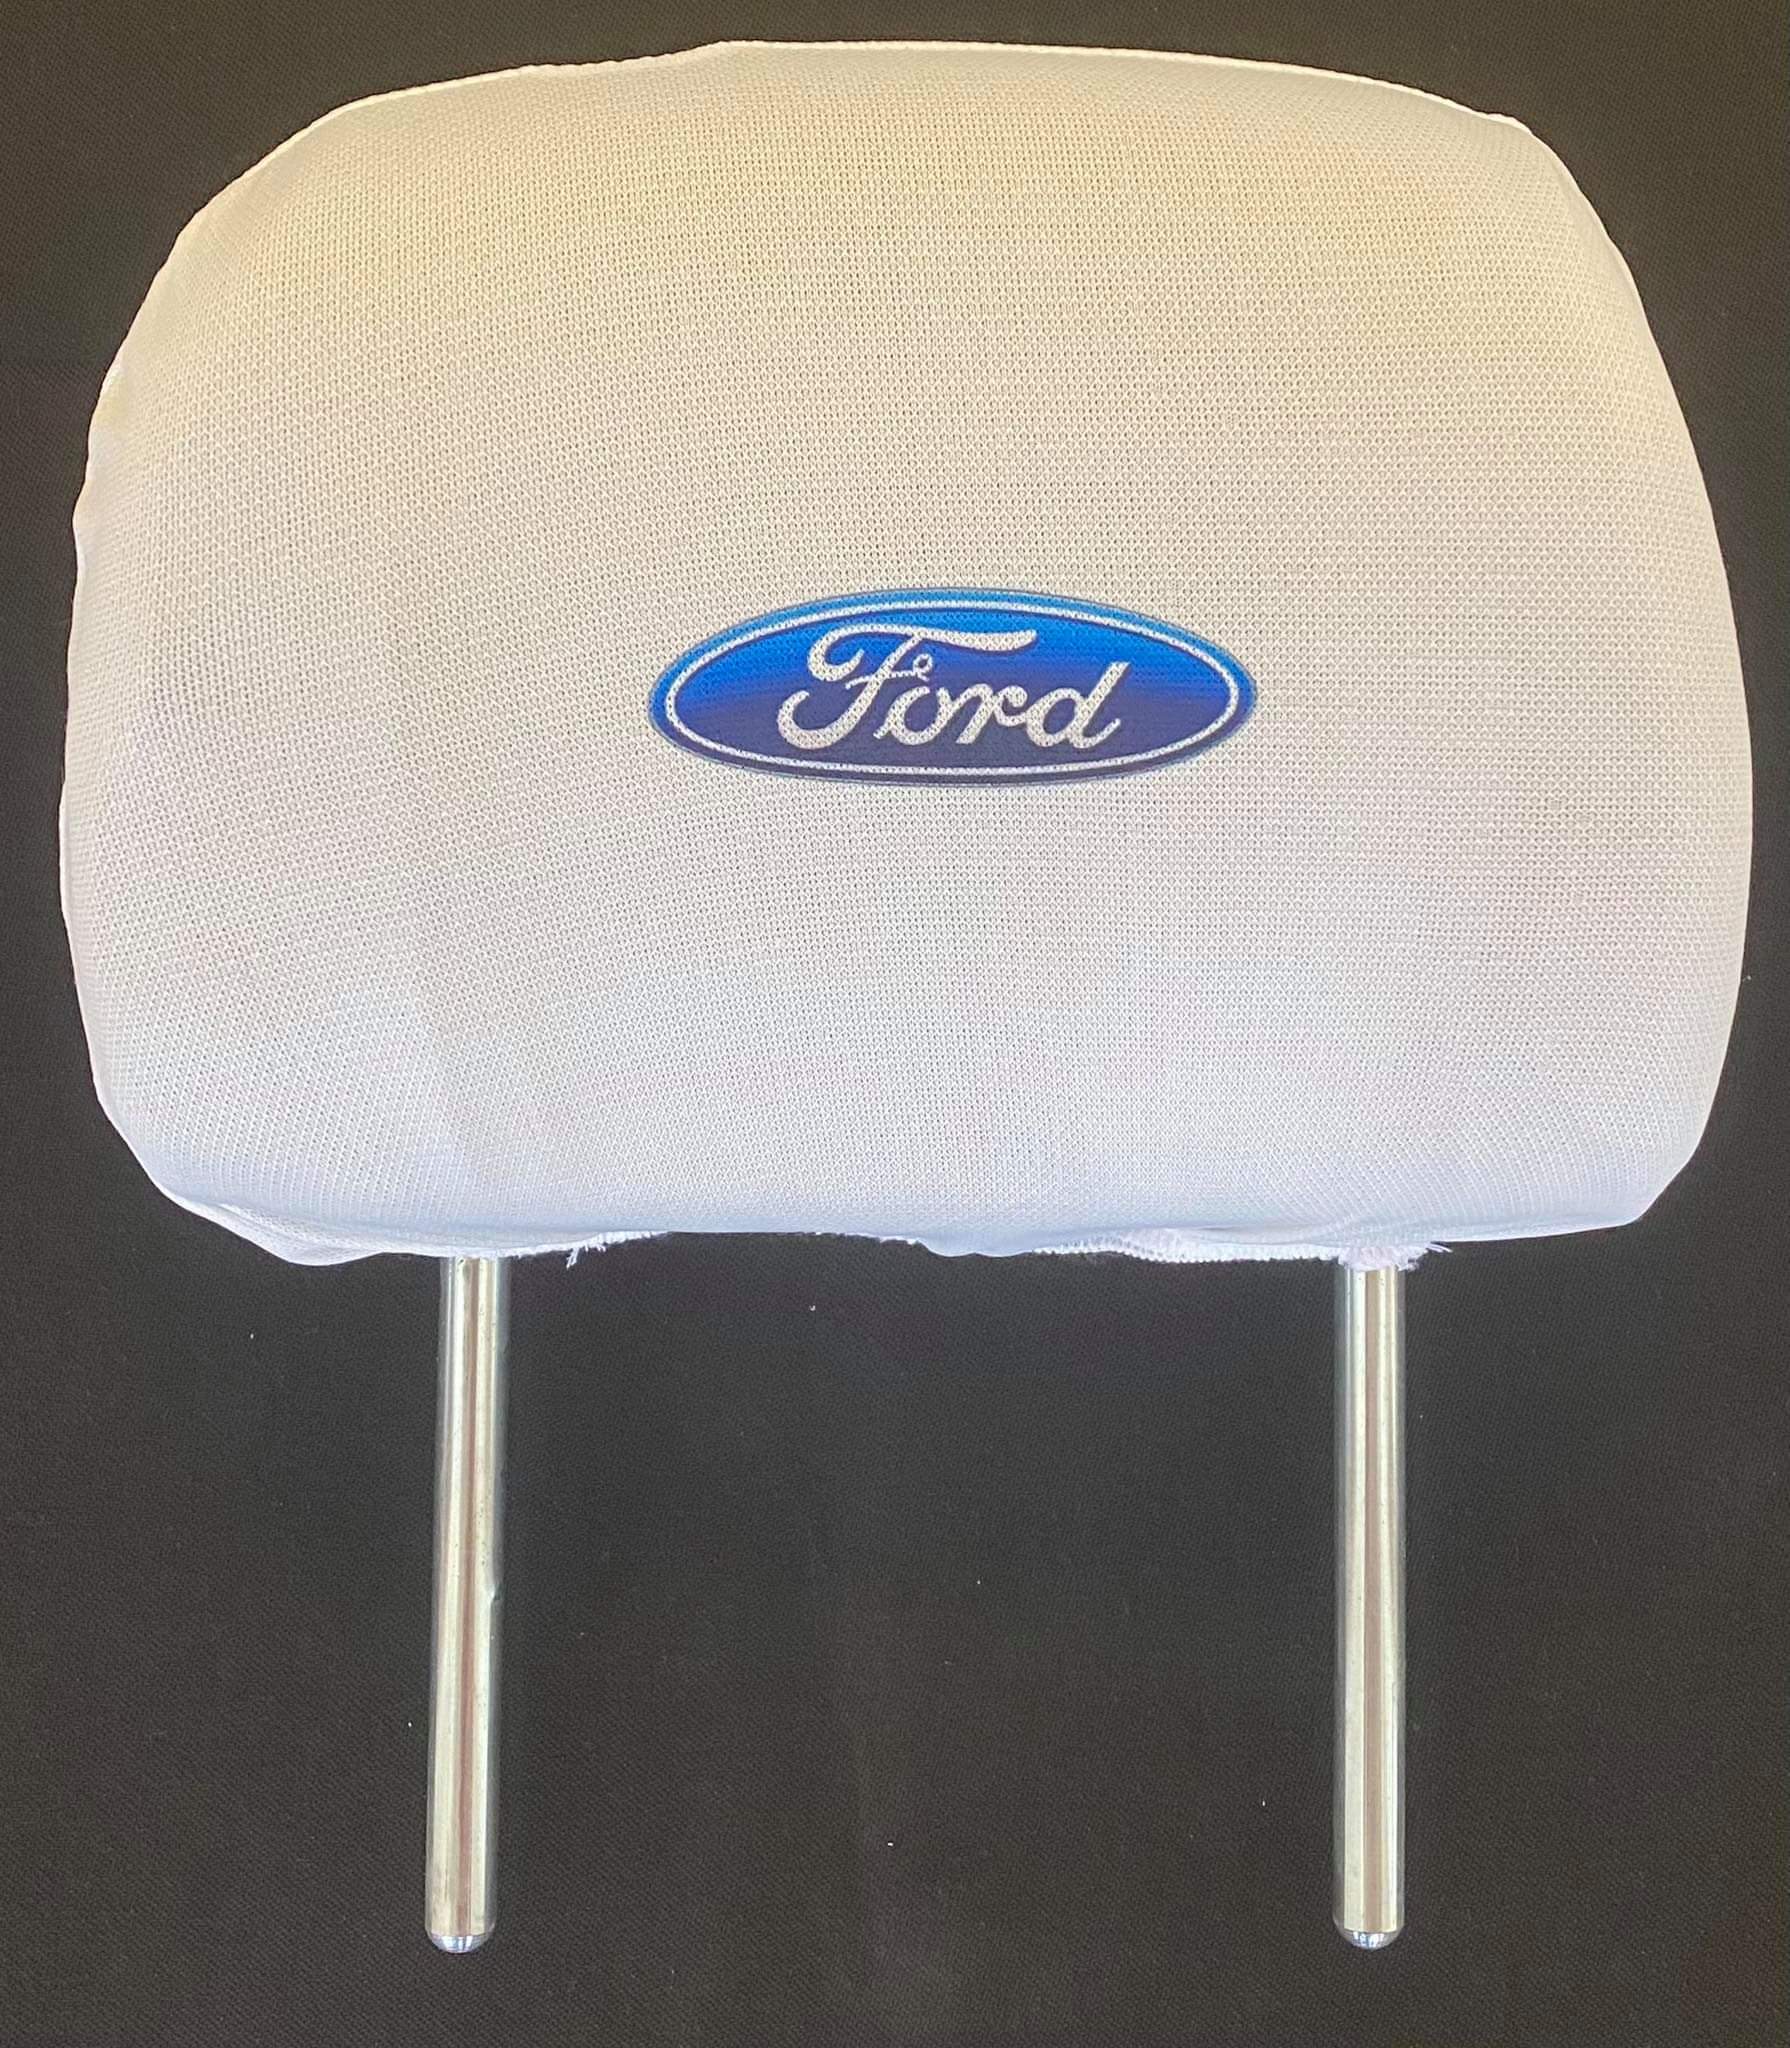 Biele návleky na opierky hlavy s logom Ford